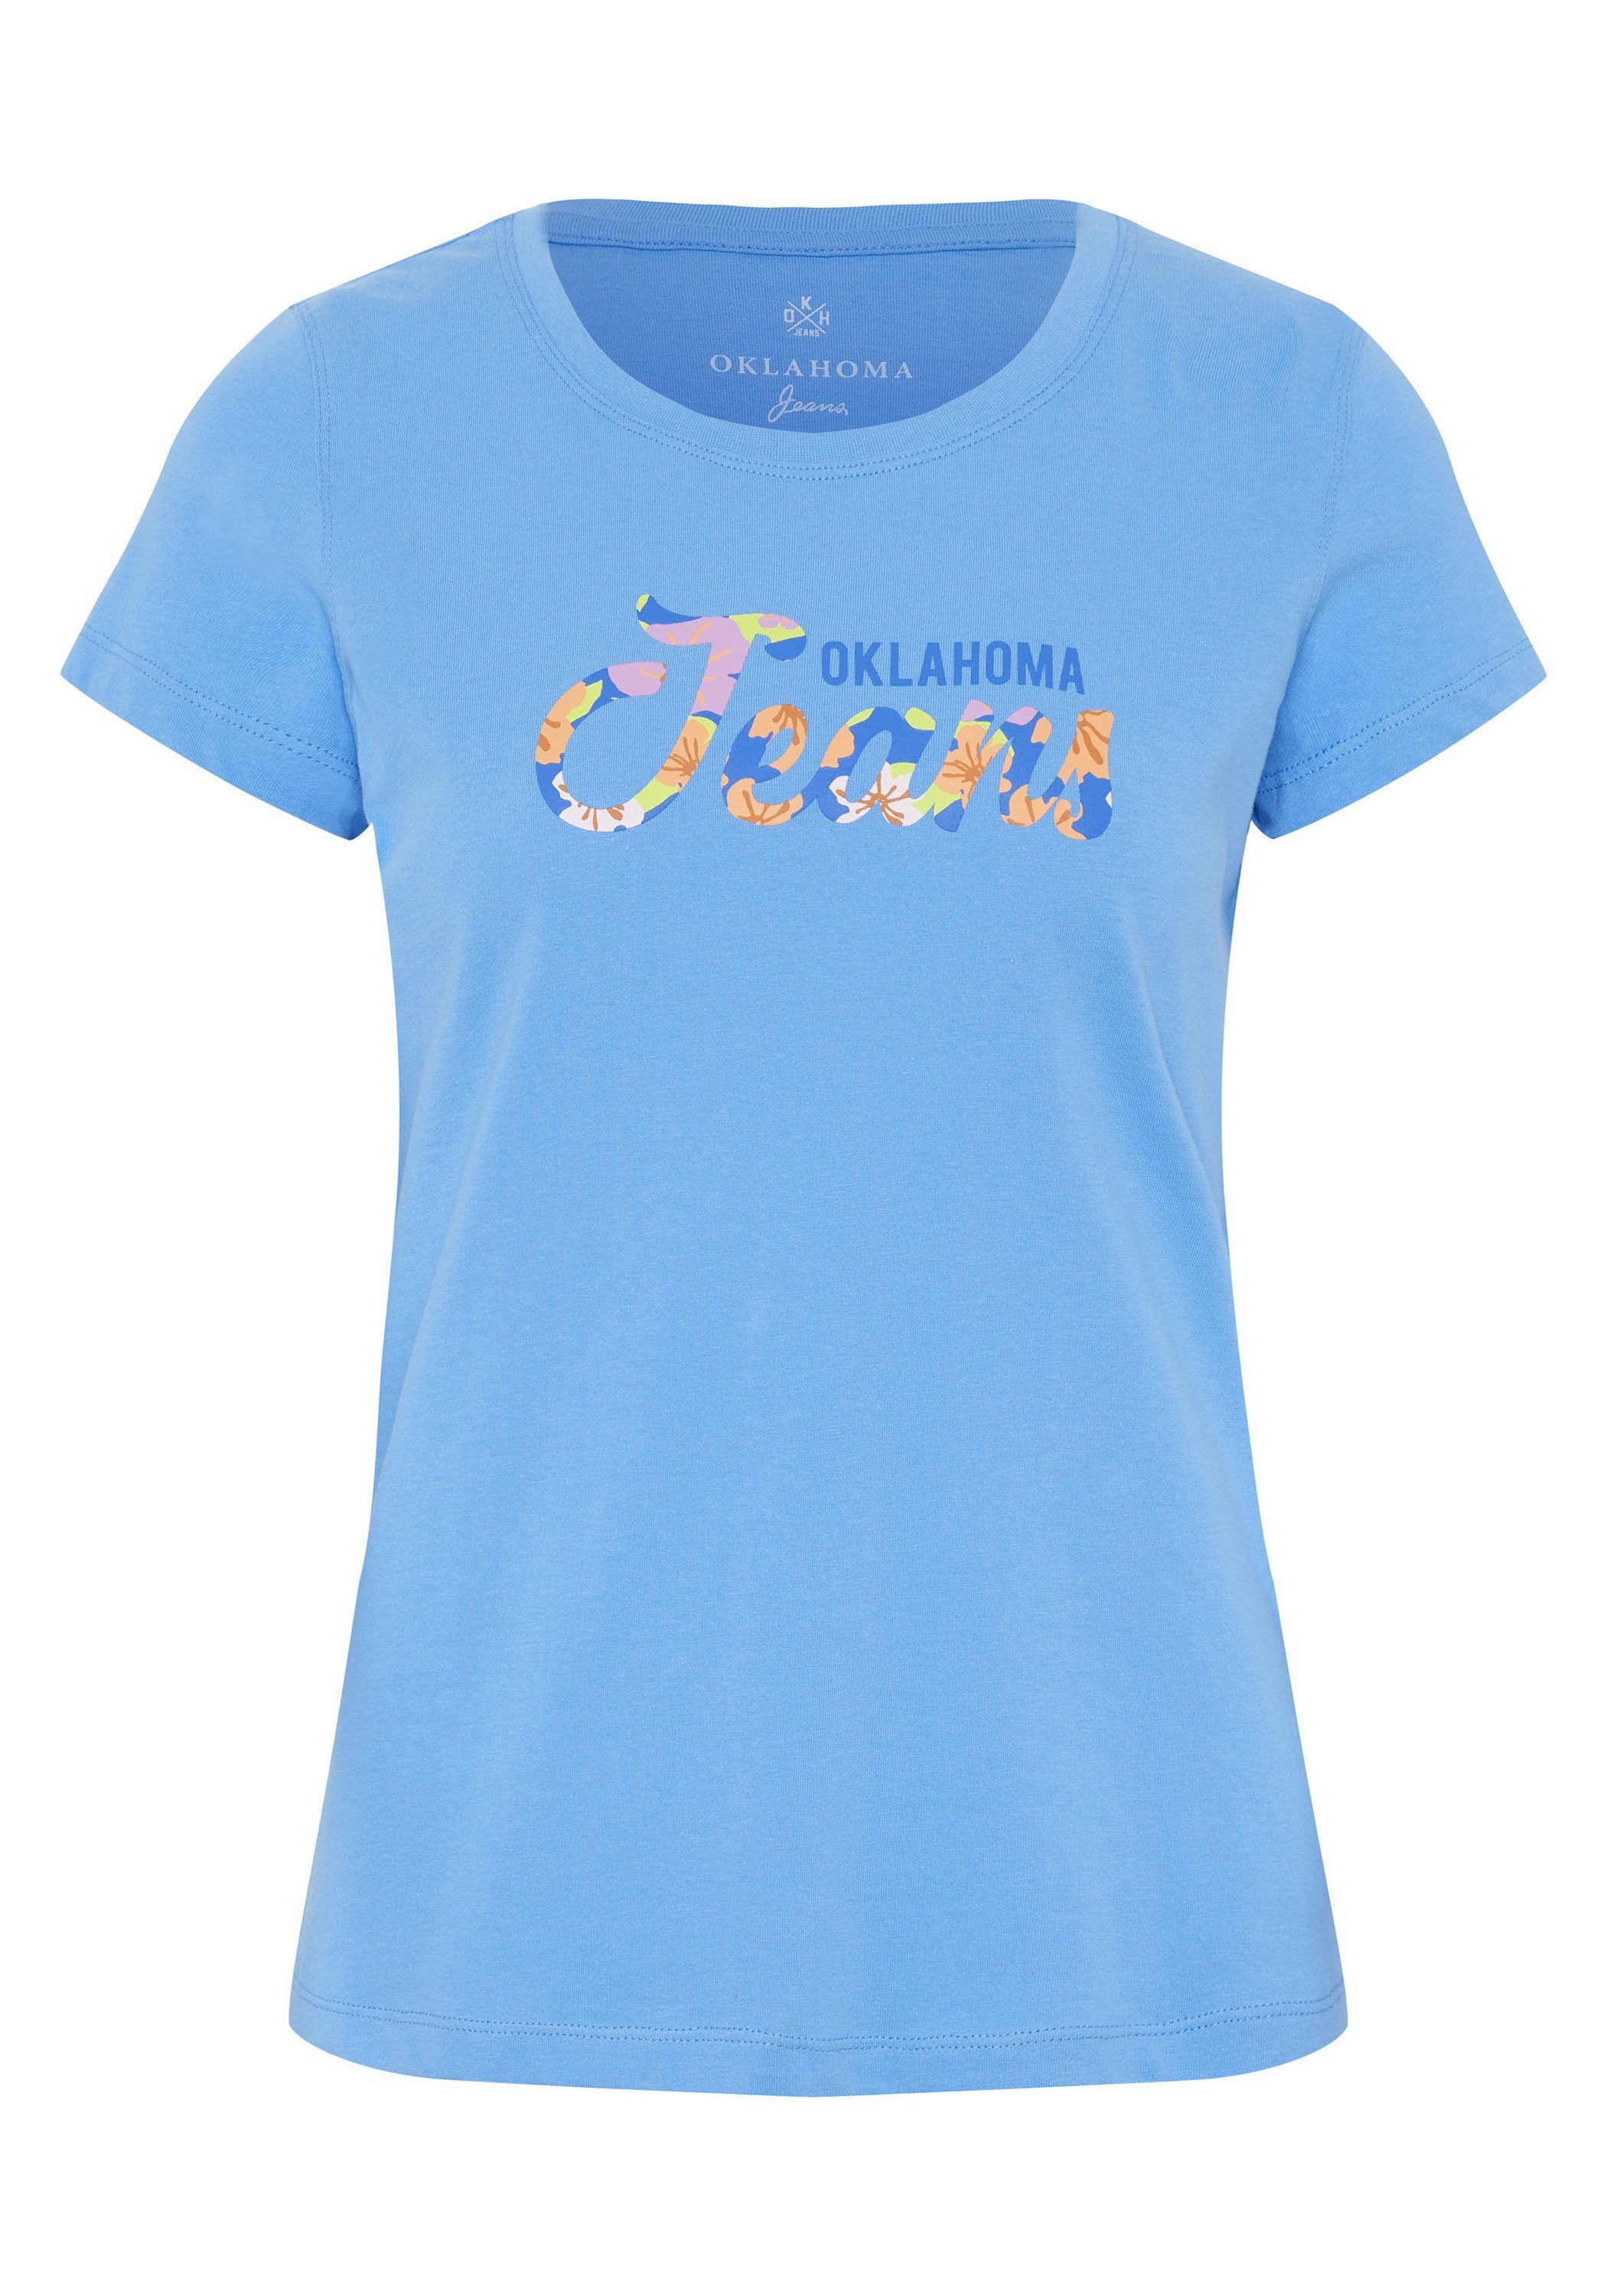 Oklahoma Jeans Print-Shirt mit floralem Label-Akzent 17-4139 Azure Blue